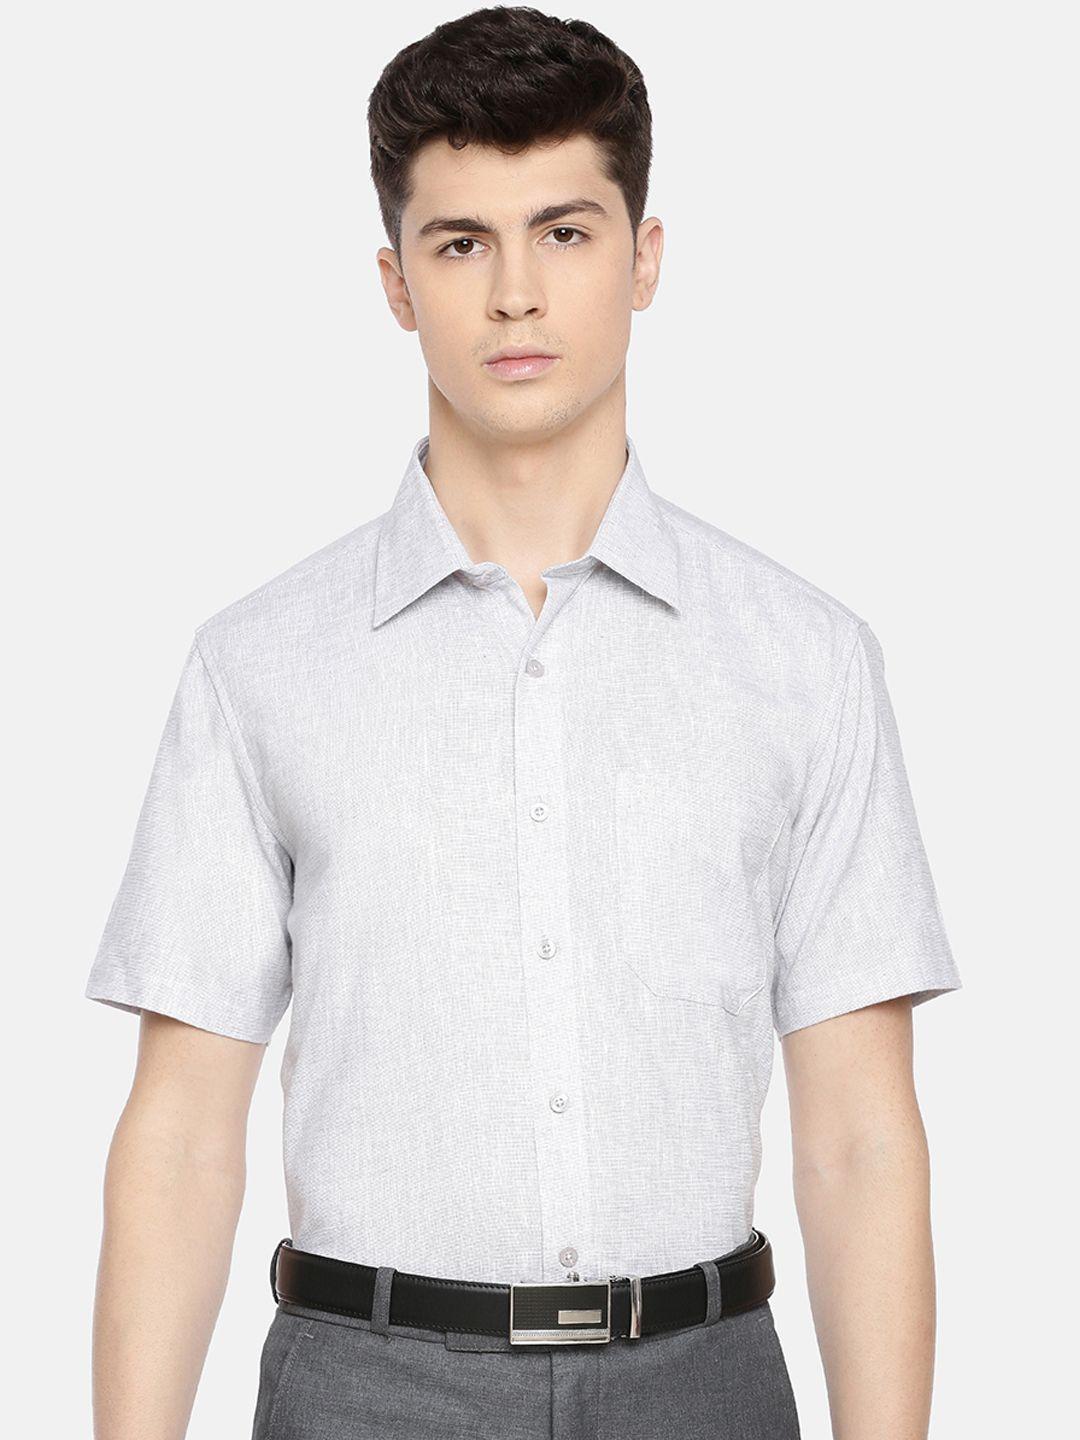 jansons men grey regular fit solid formal shirt